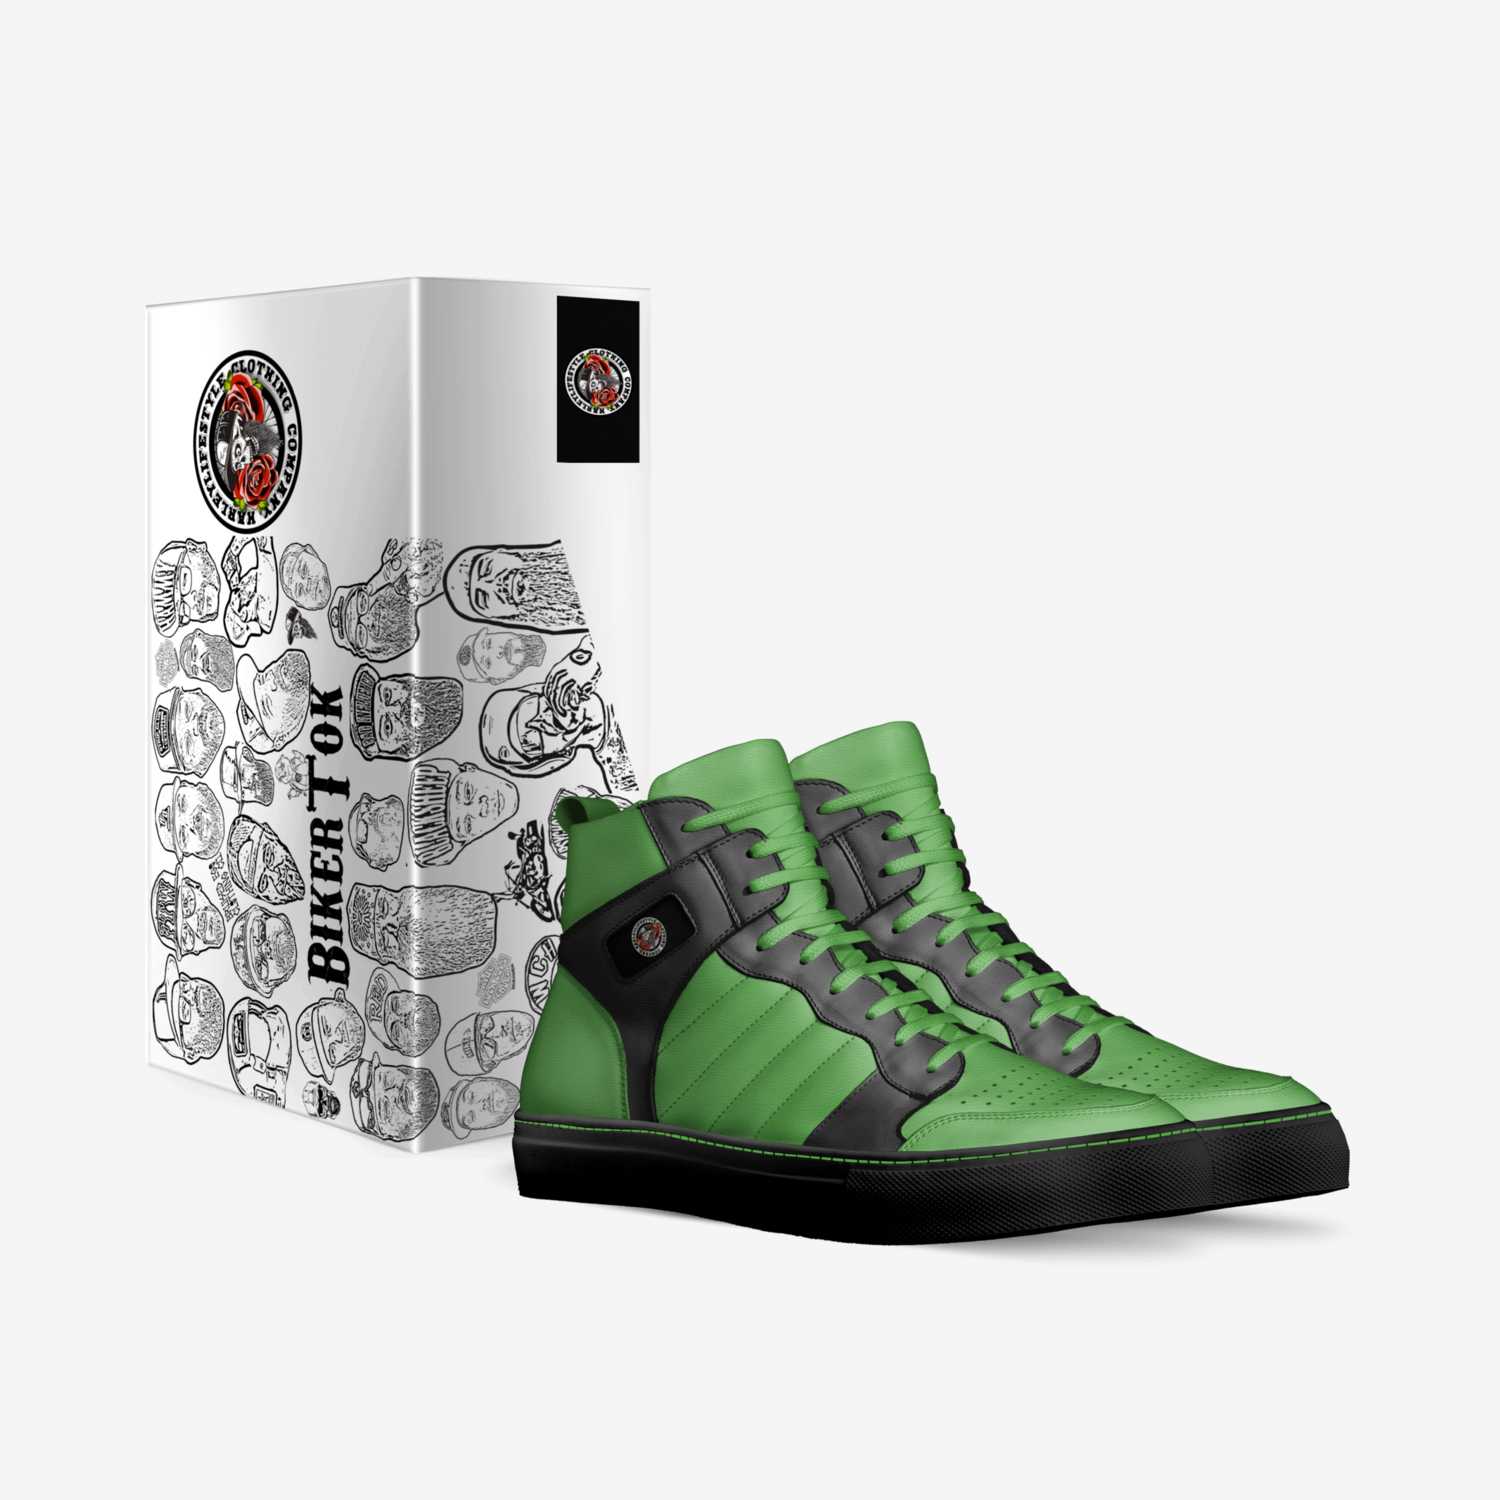 HarleyLifestyleIII custom made in Italy shoes by Shawn Barrickman | Box view